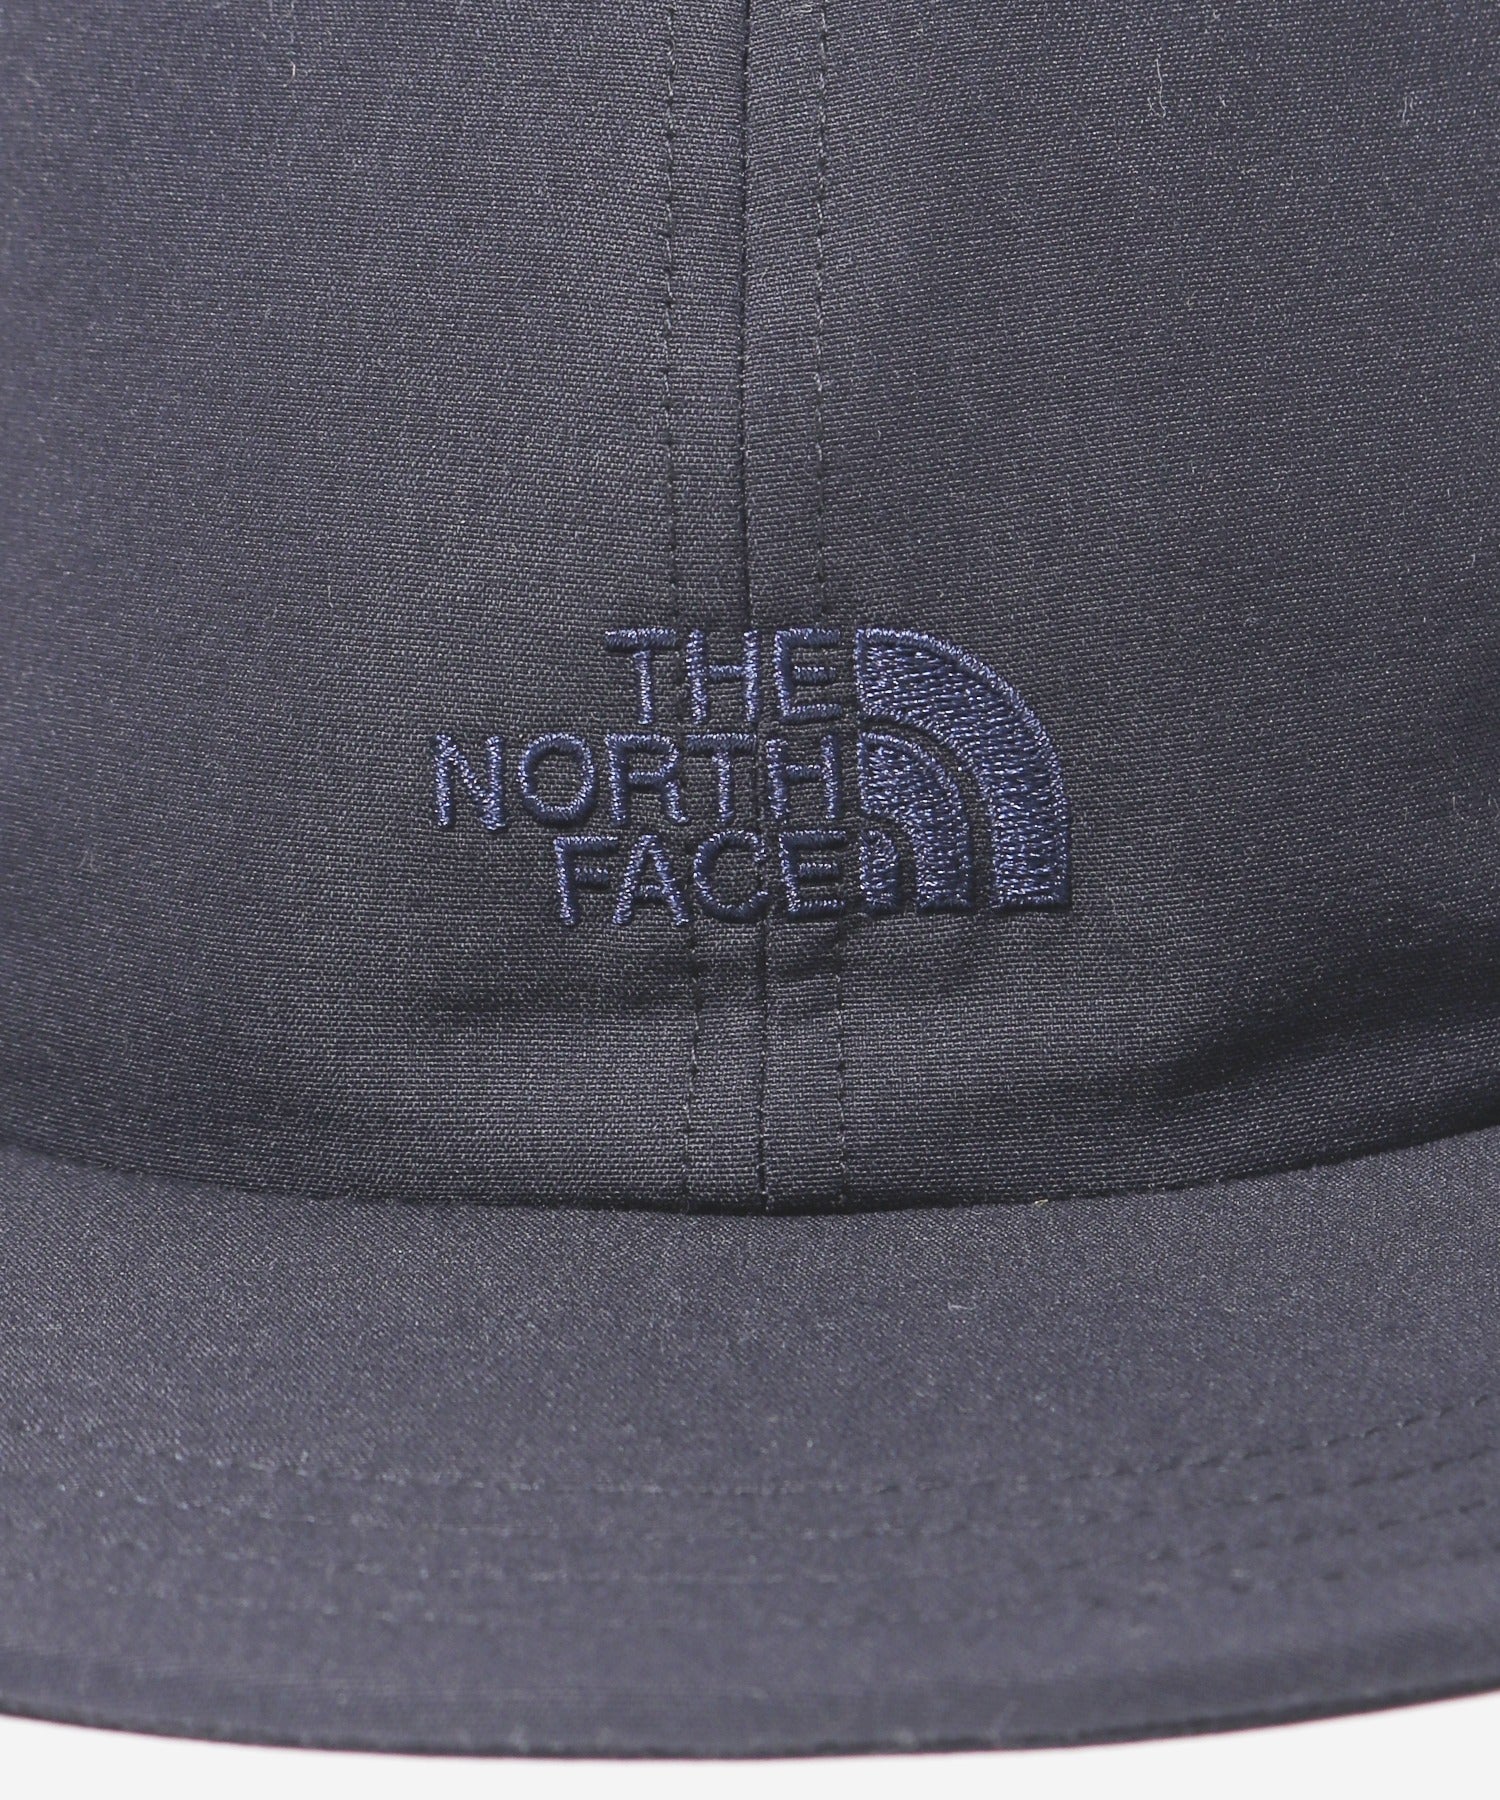 THE NORTH FACE/ザ・ノースフェイス CLASS V BALLCAP